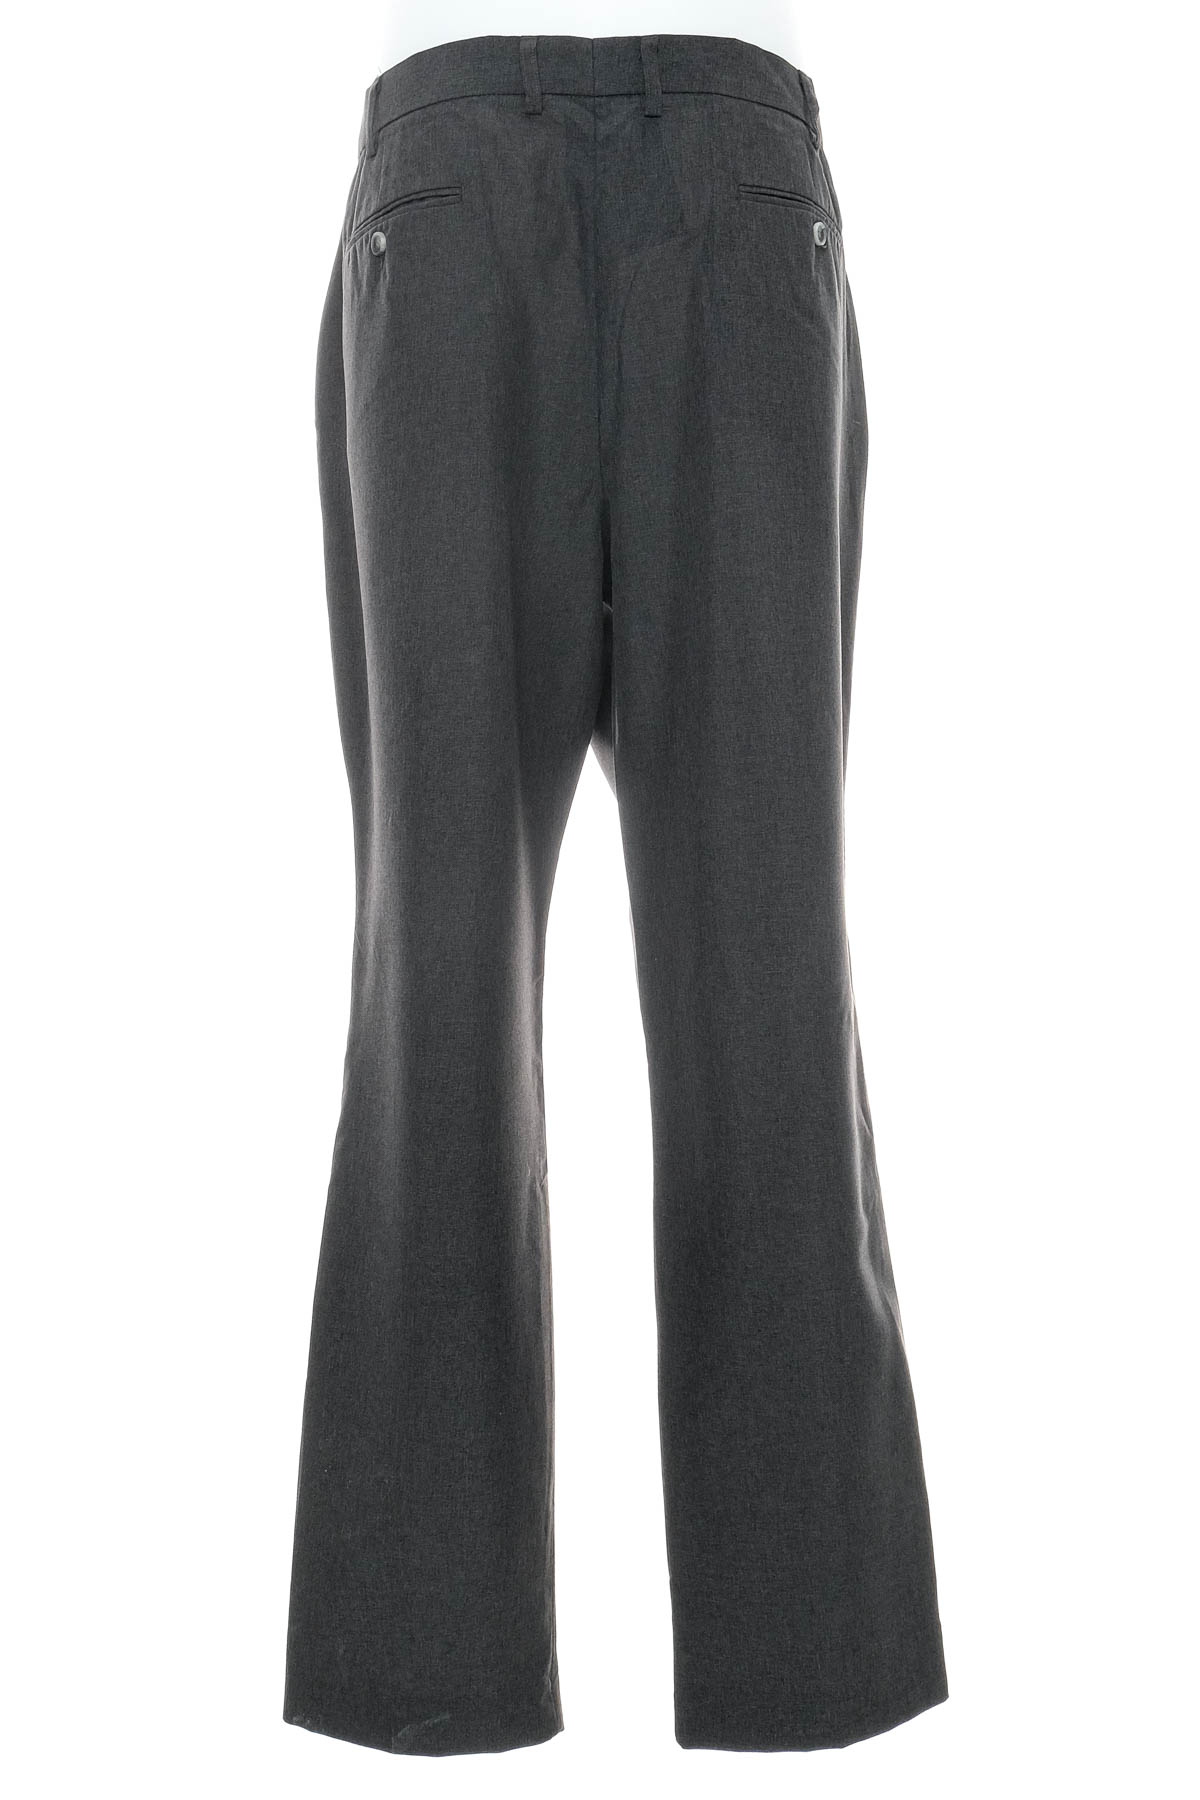 Pantalon pentru bărbați - Bpc selection bonprix collection - 1